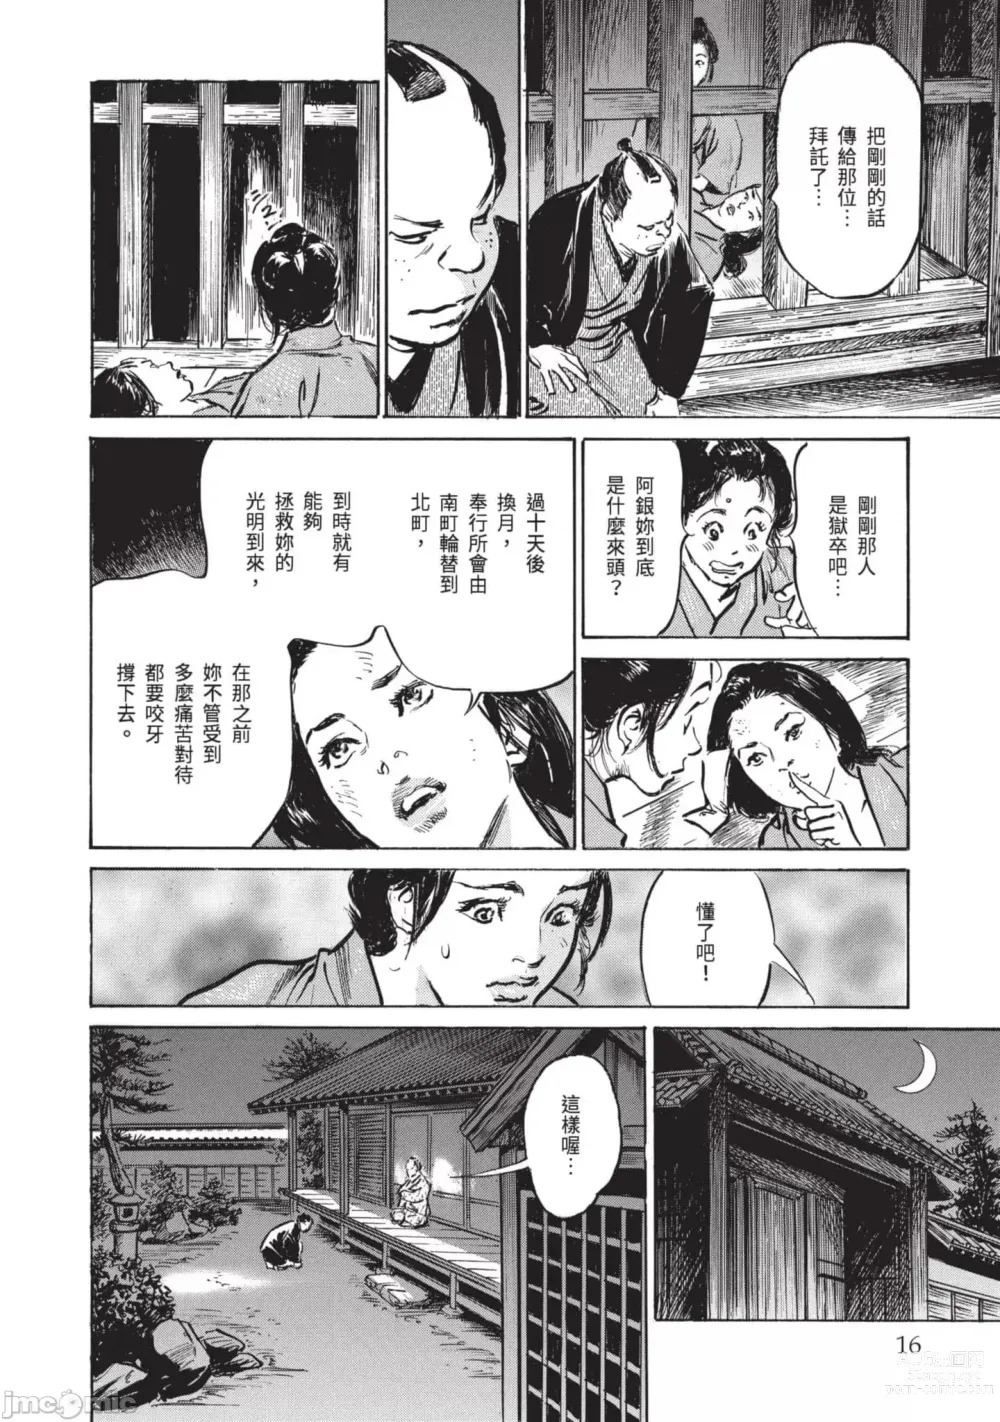 Page 15 of manga Inshuu Hiroku Midare Mandara 3